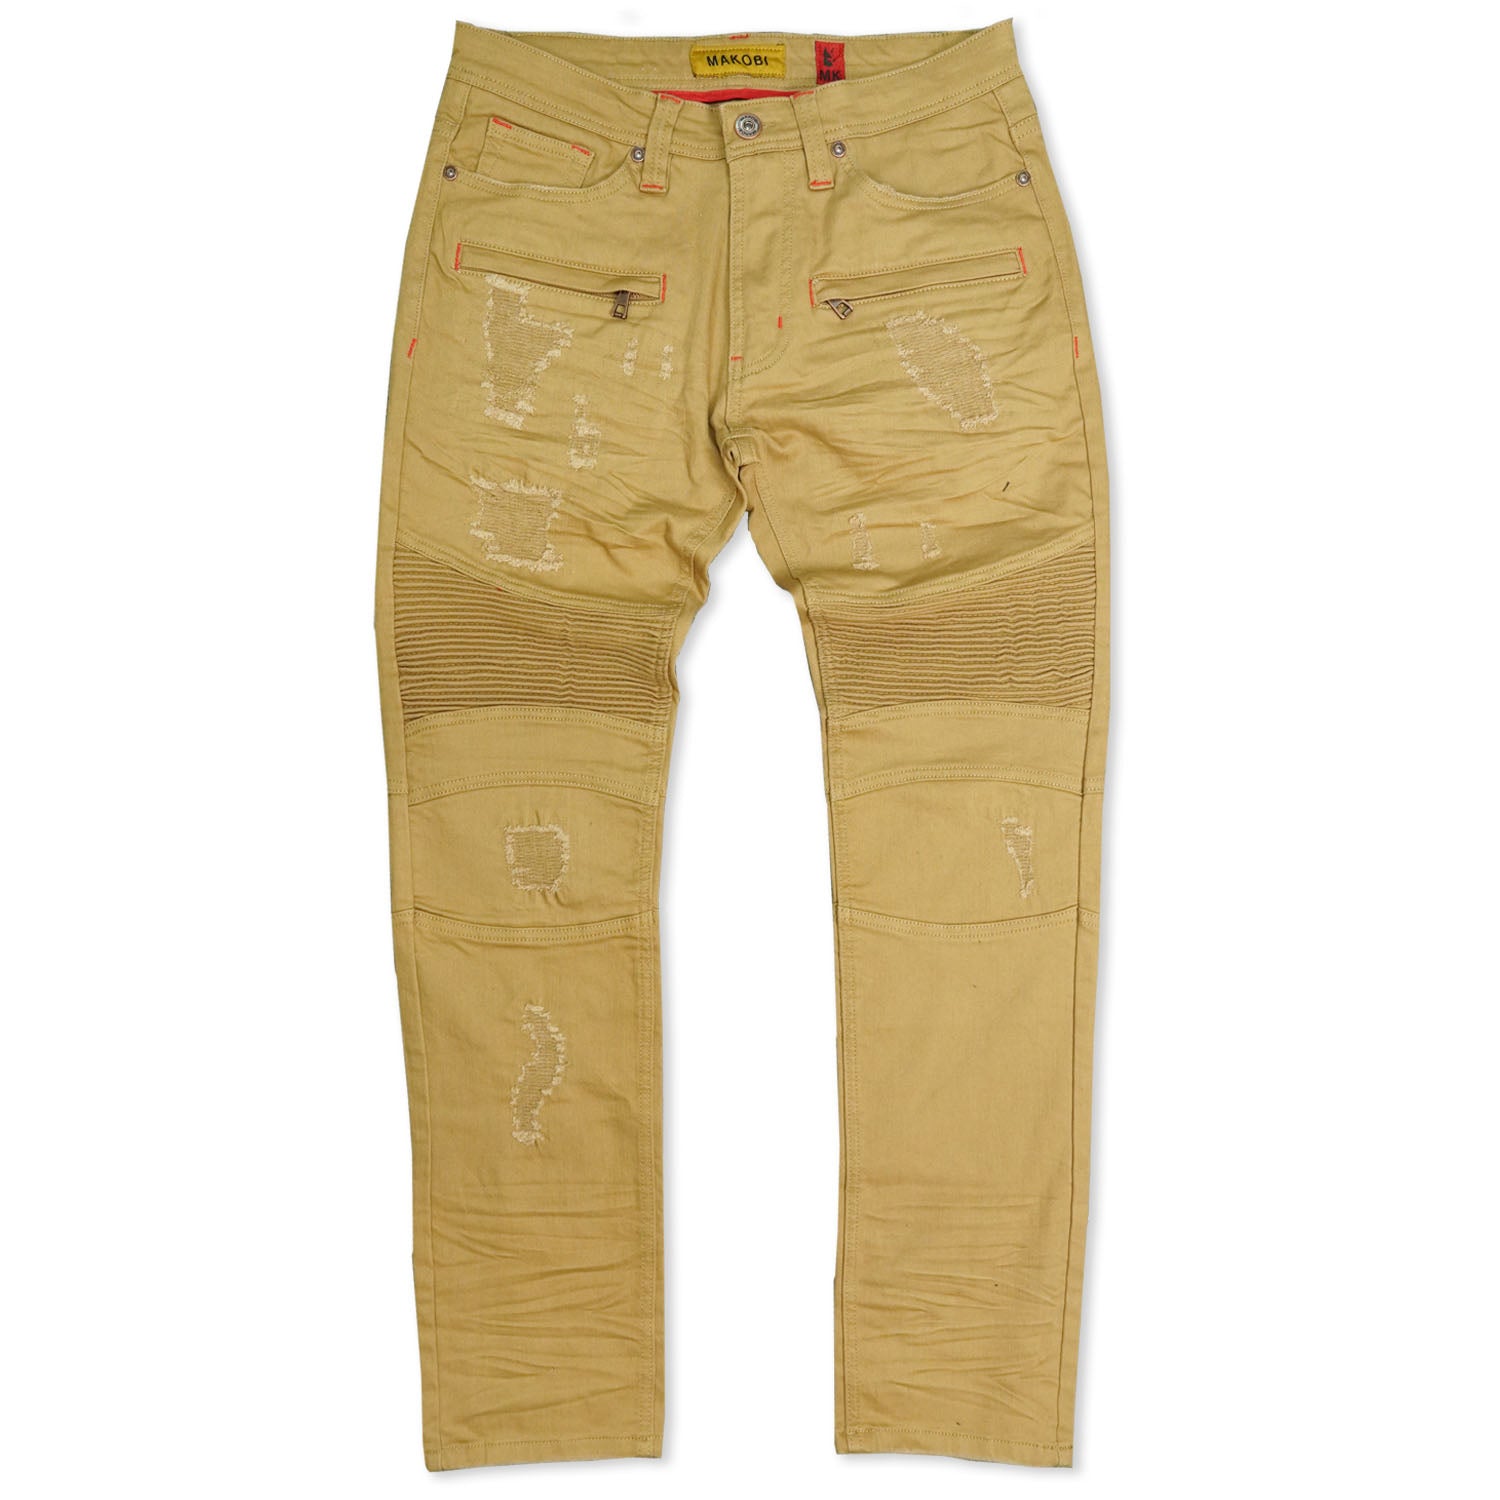 M1786 Makobi Prado Biker Jeans pẹlu Rip & Tunṣe - Khaki